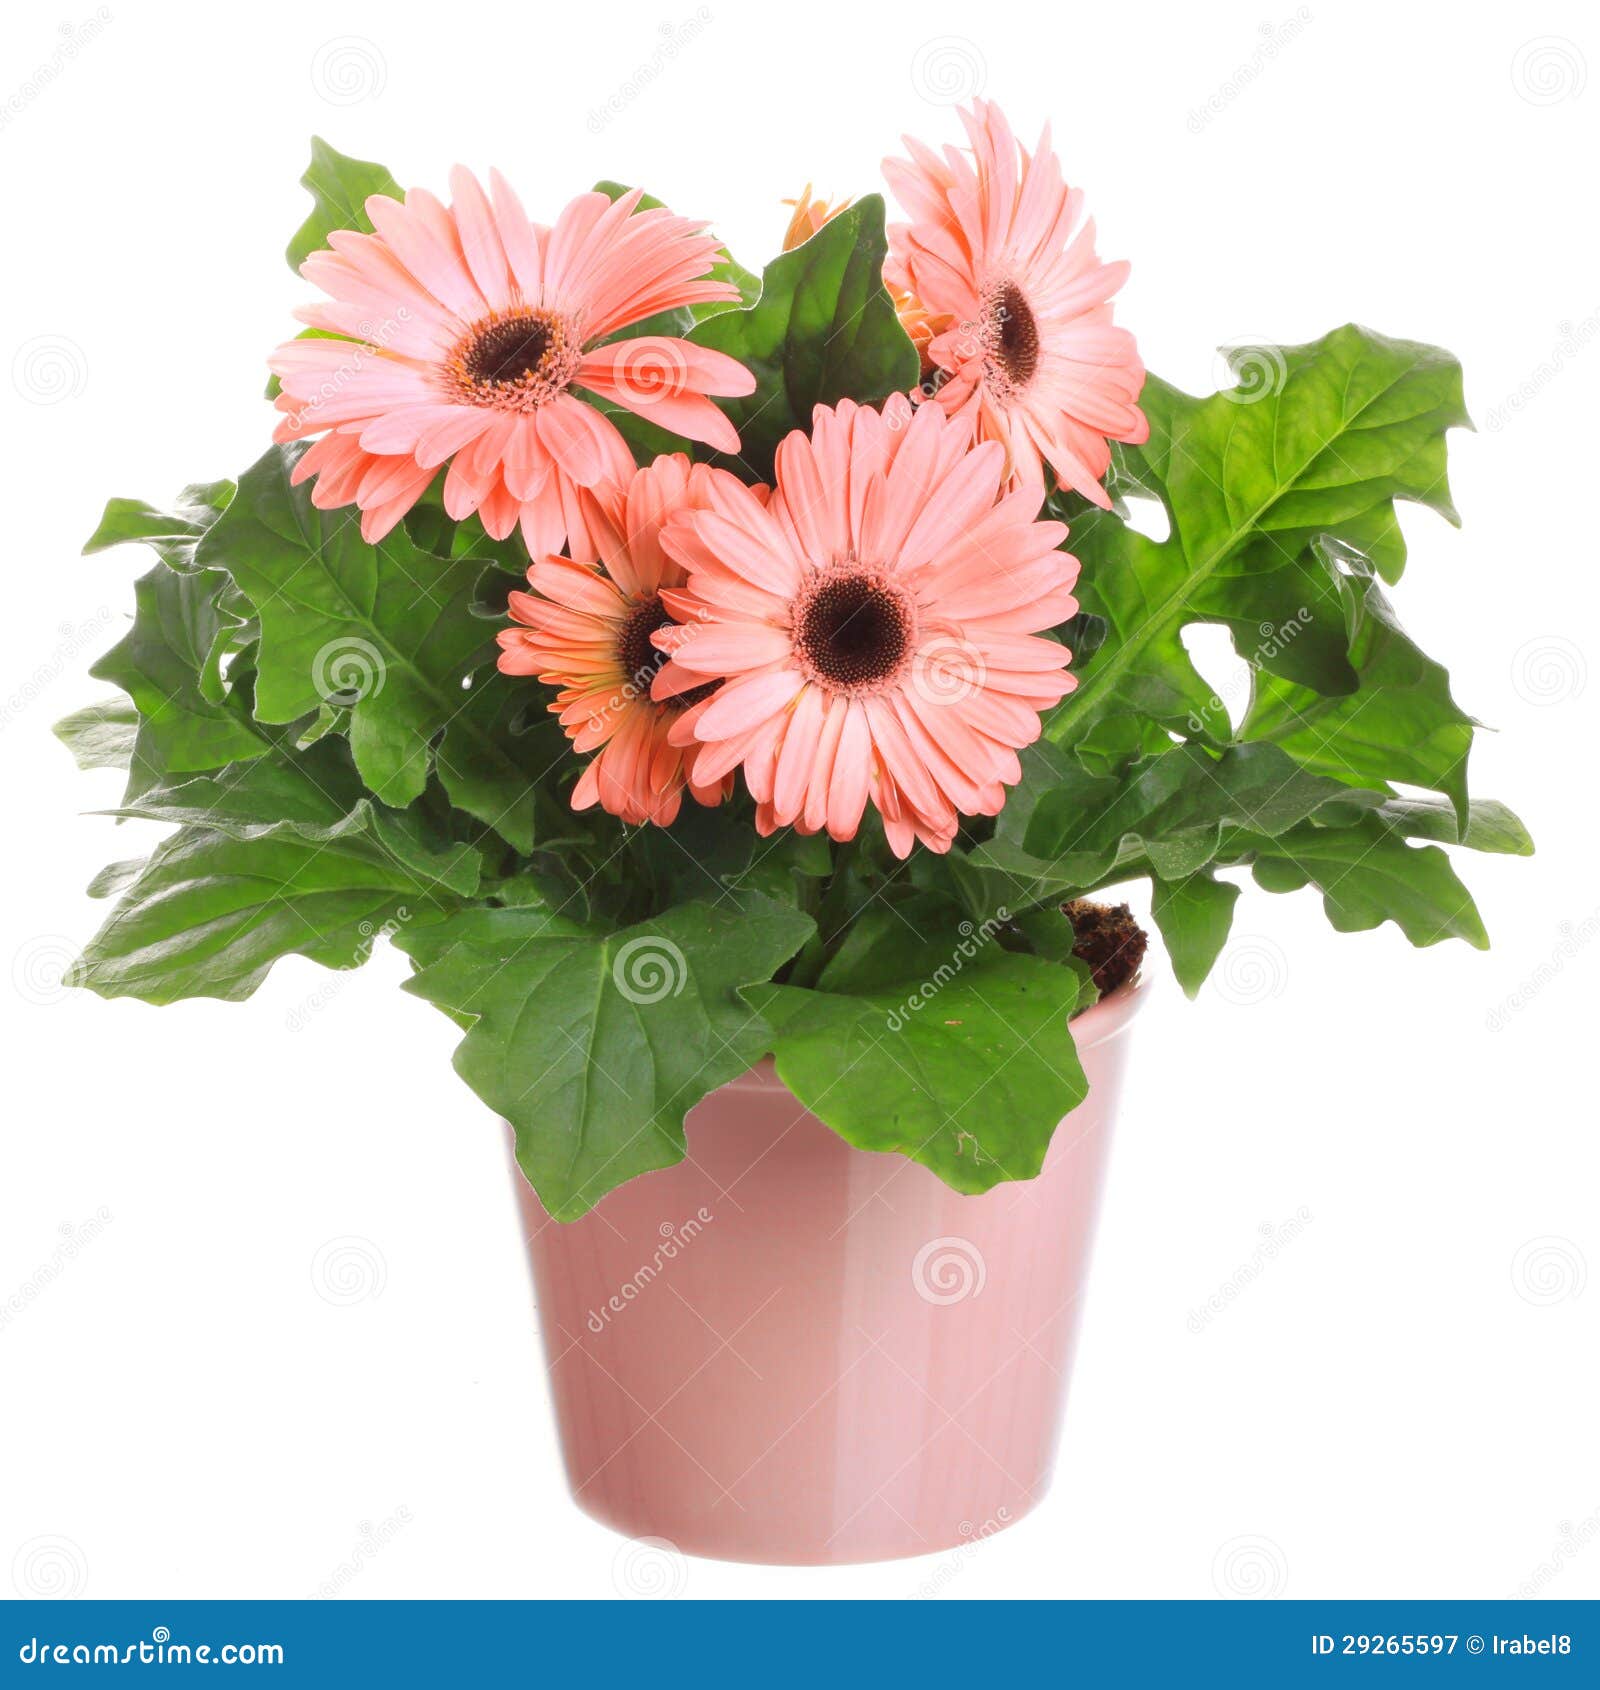 gerber's flowers in a flowerpot